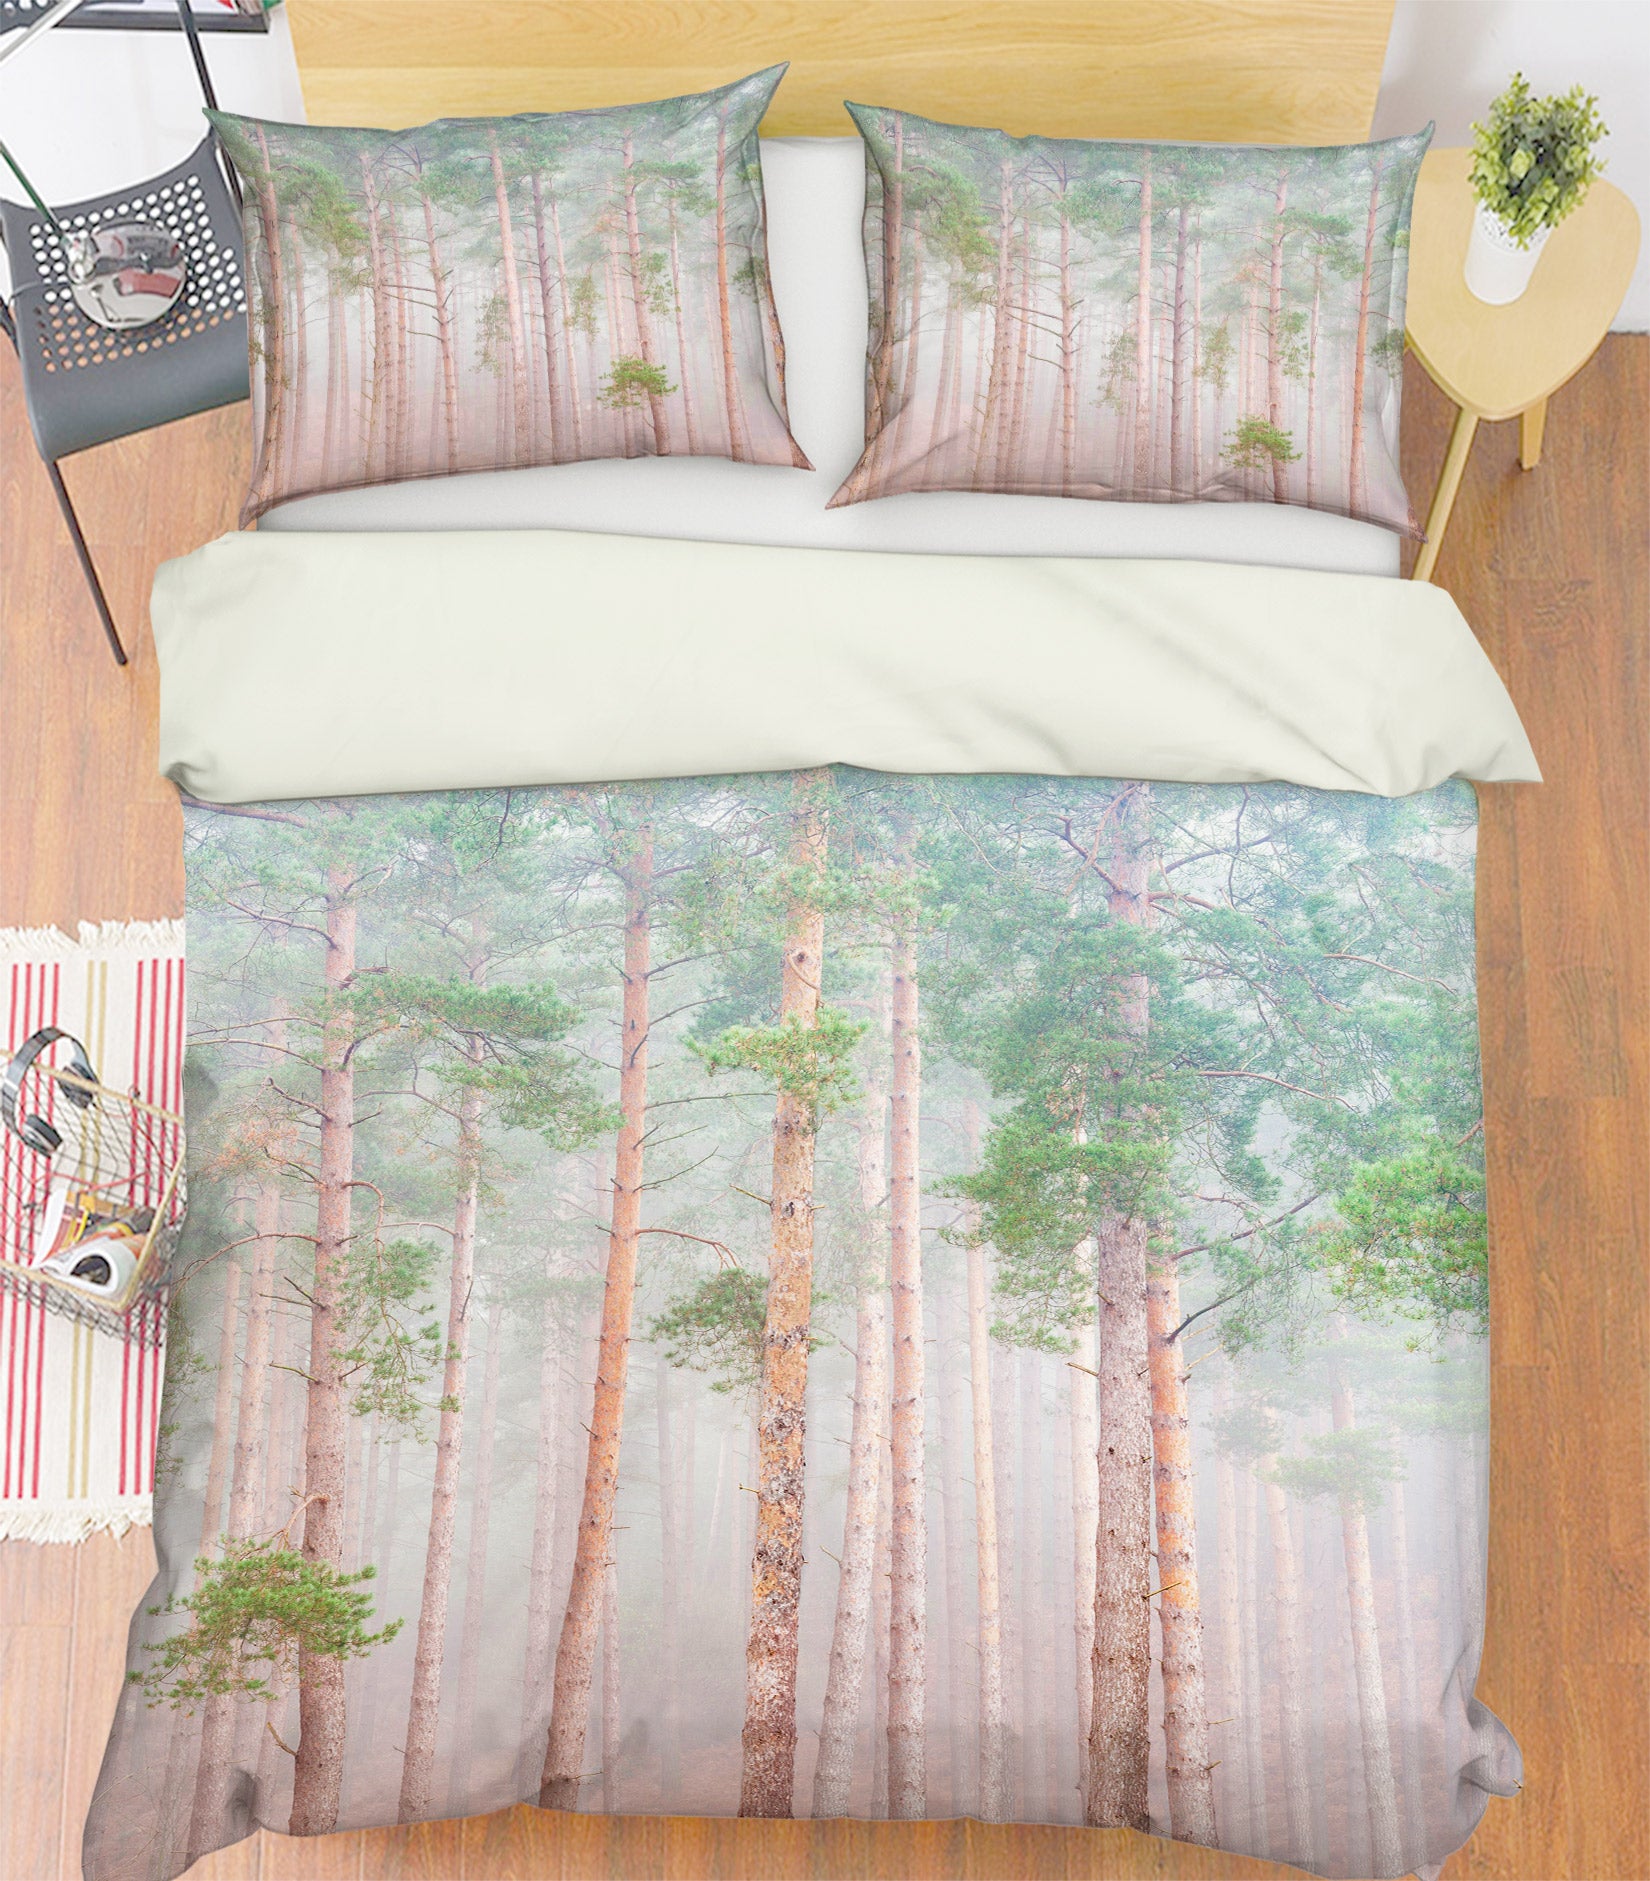 3D Trunk Leaves 7017 Assaf Frank Bedding Bed Pillowcases Quilt Cover Duvet Cover